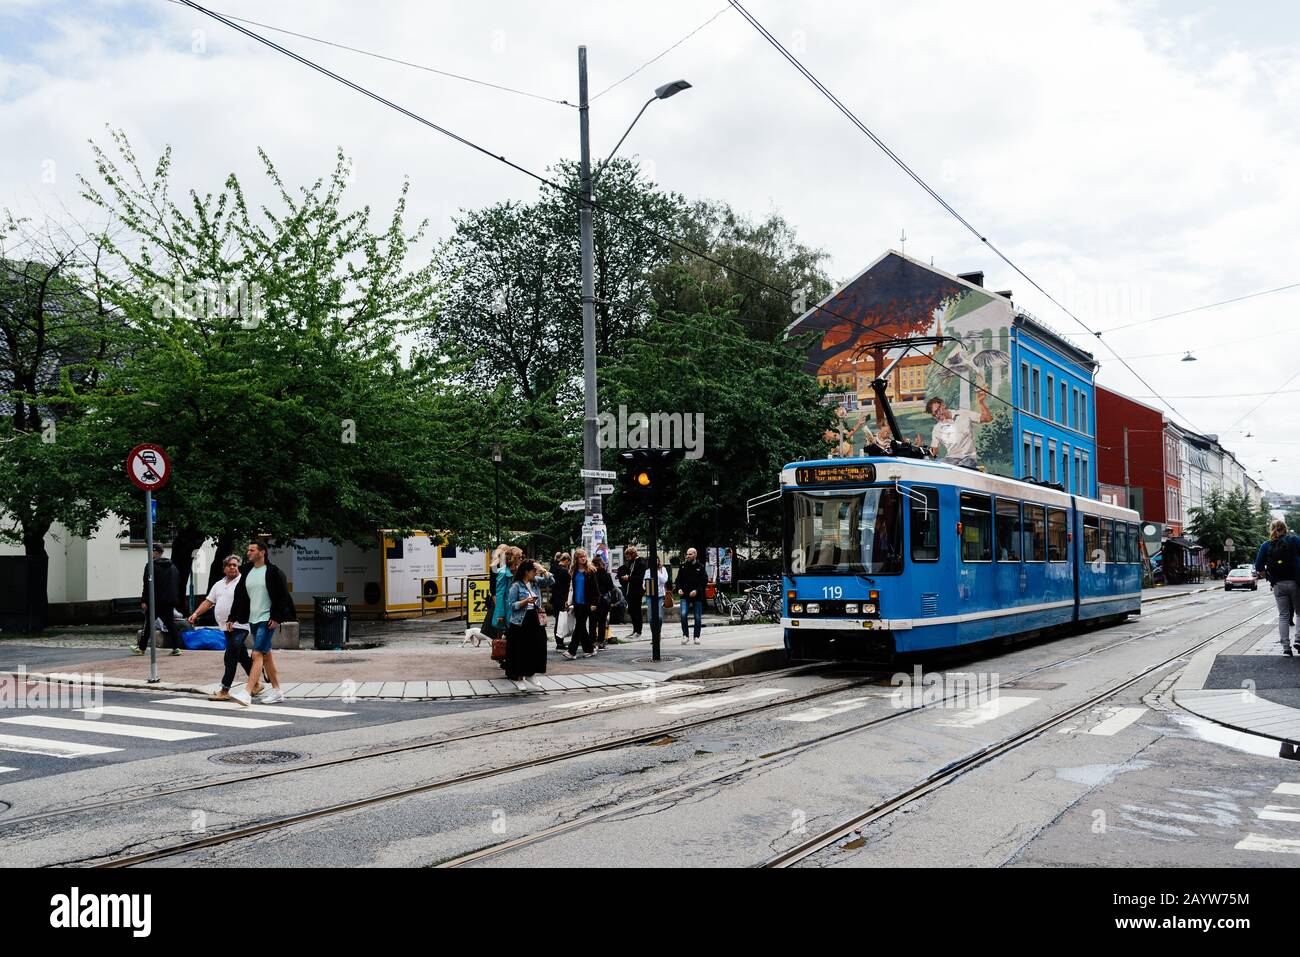 Oslo, Norway - August 11, 2019: Blue tram speeding up in Grunerlokka, a trendy hipster neighborhood in central Oslo. Summer rain Stock Photo